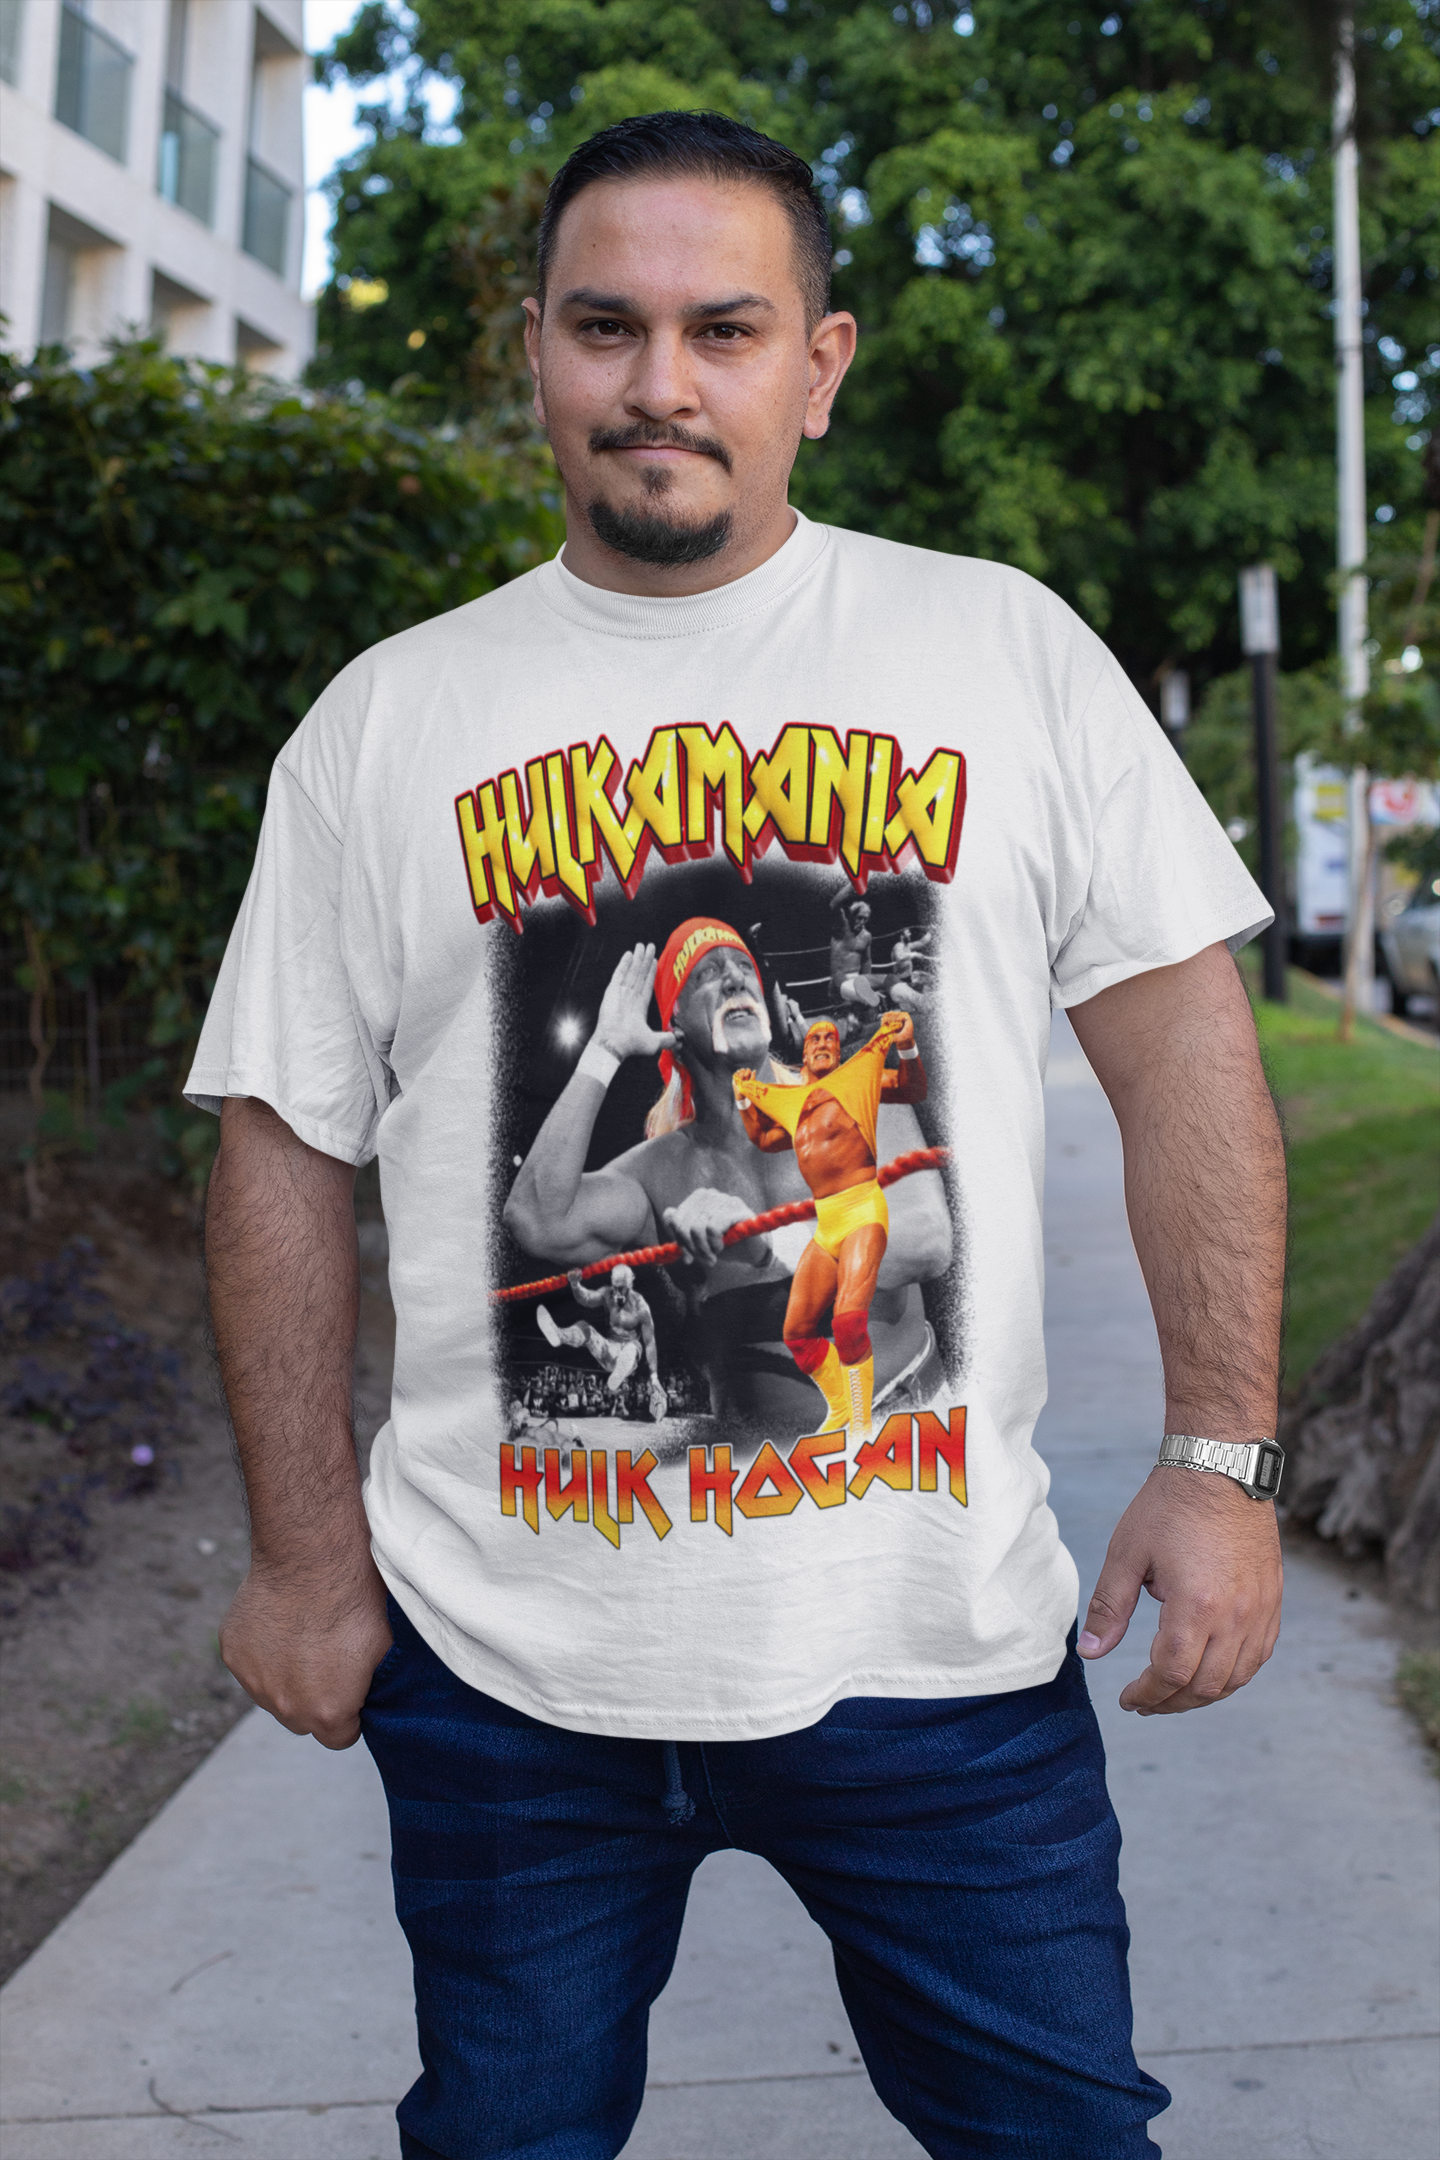 Hulkamania Forever T-Shirt